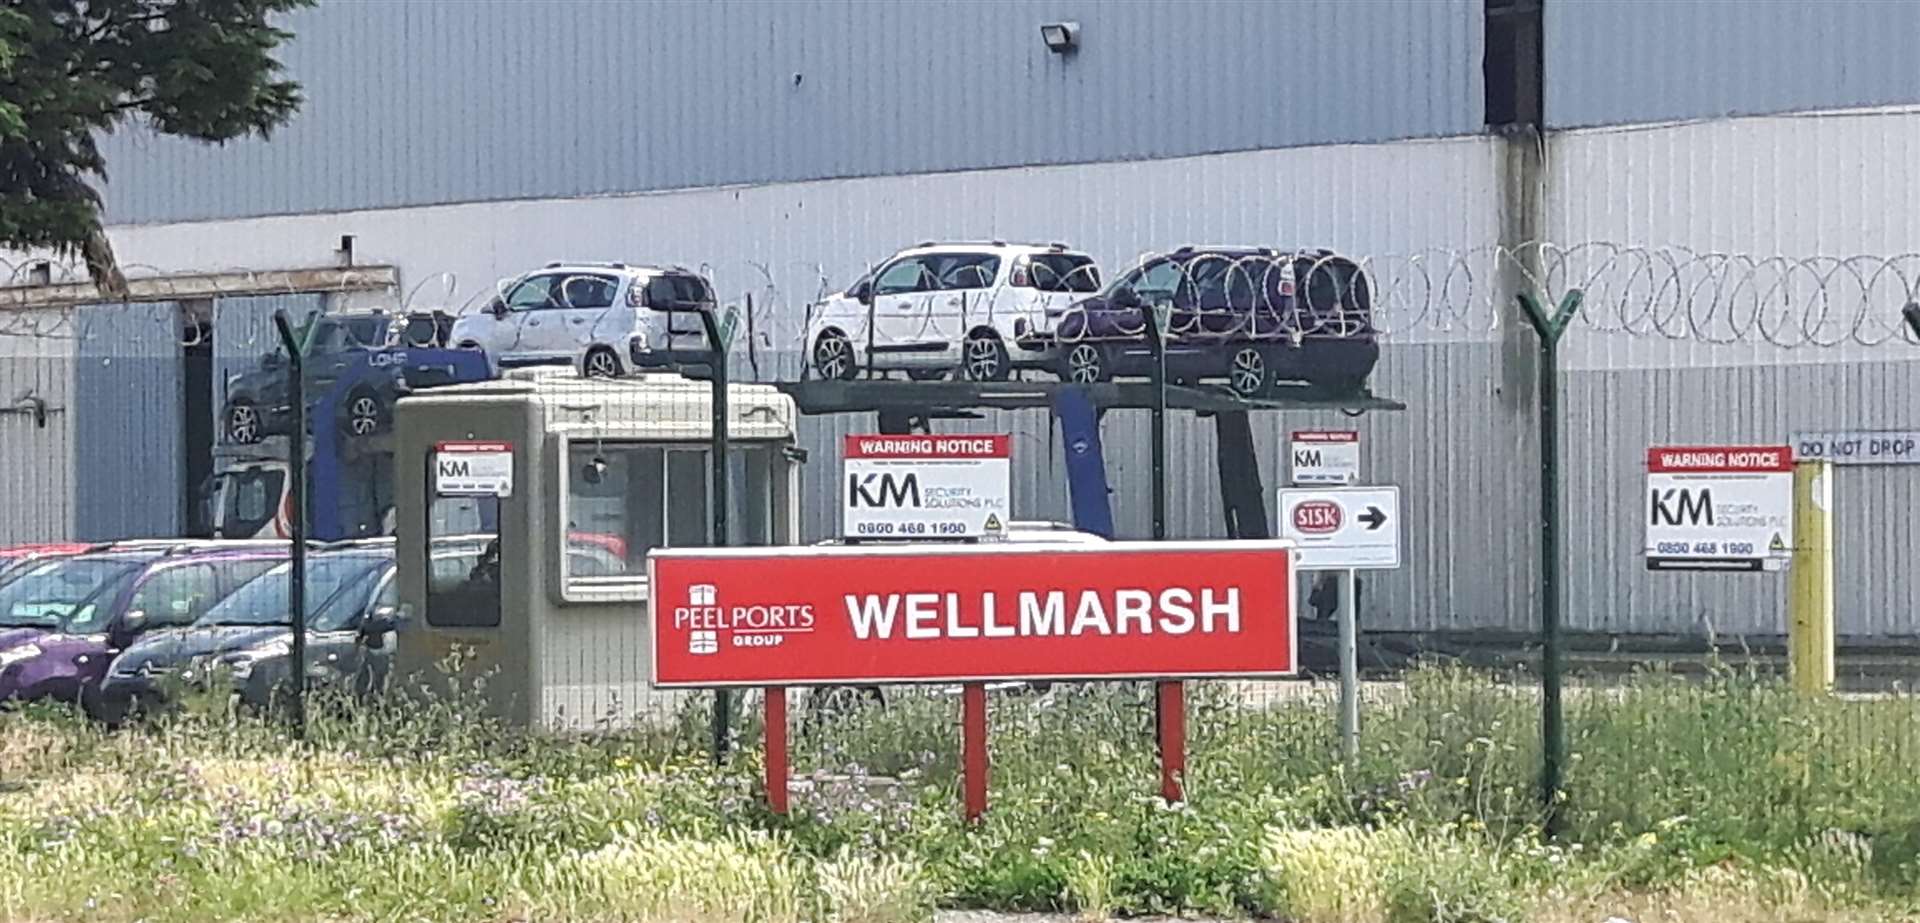 Peel Ports Wellmarsh site (7577939)